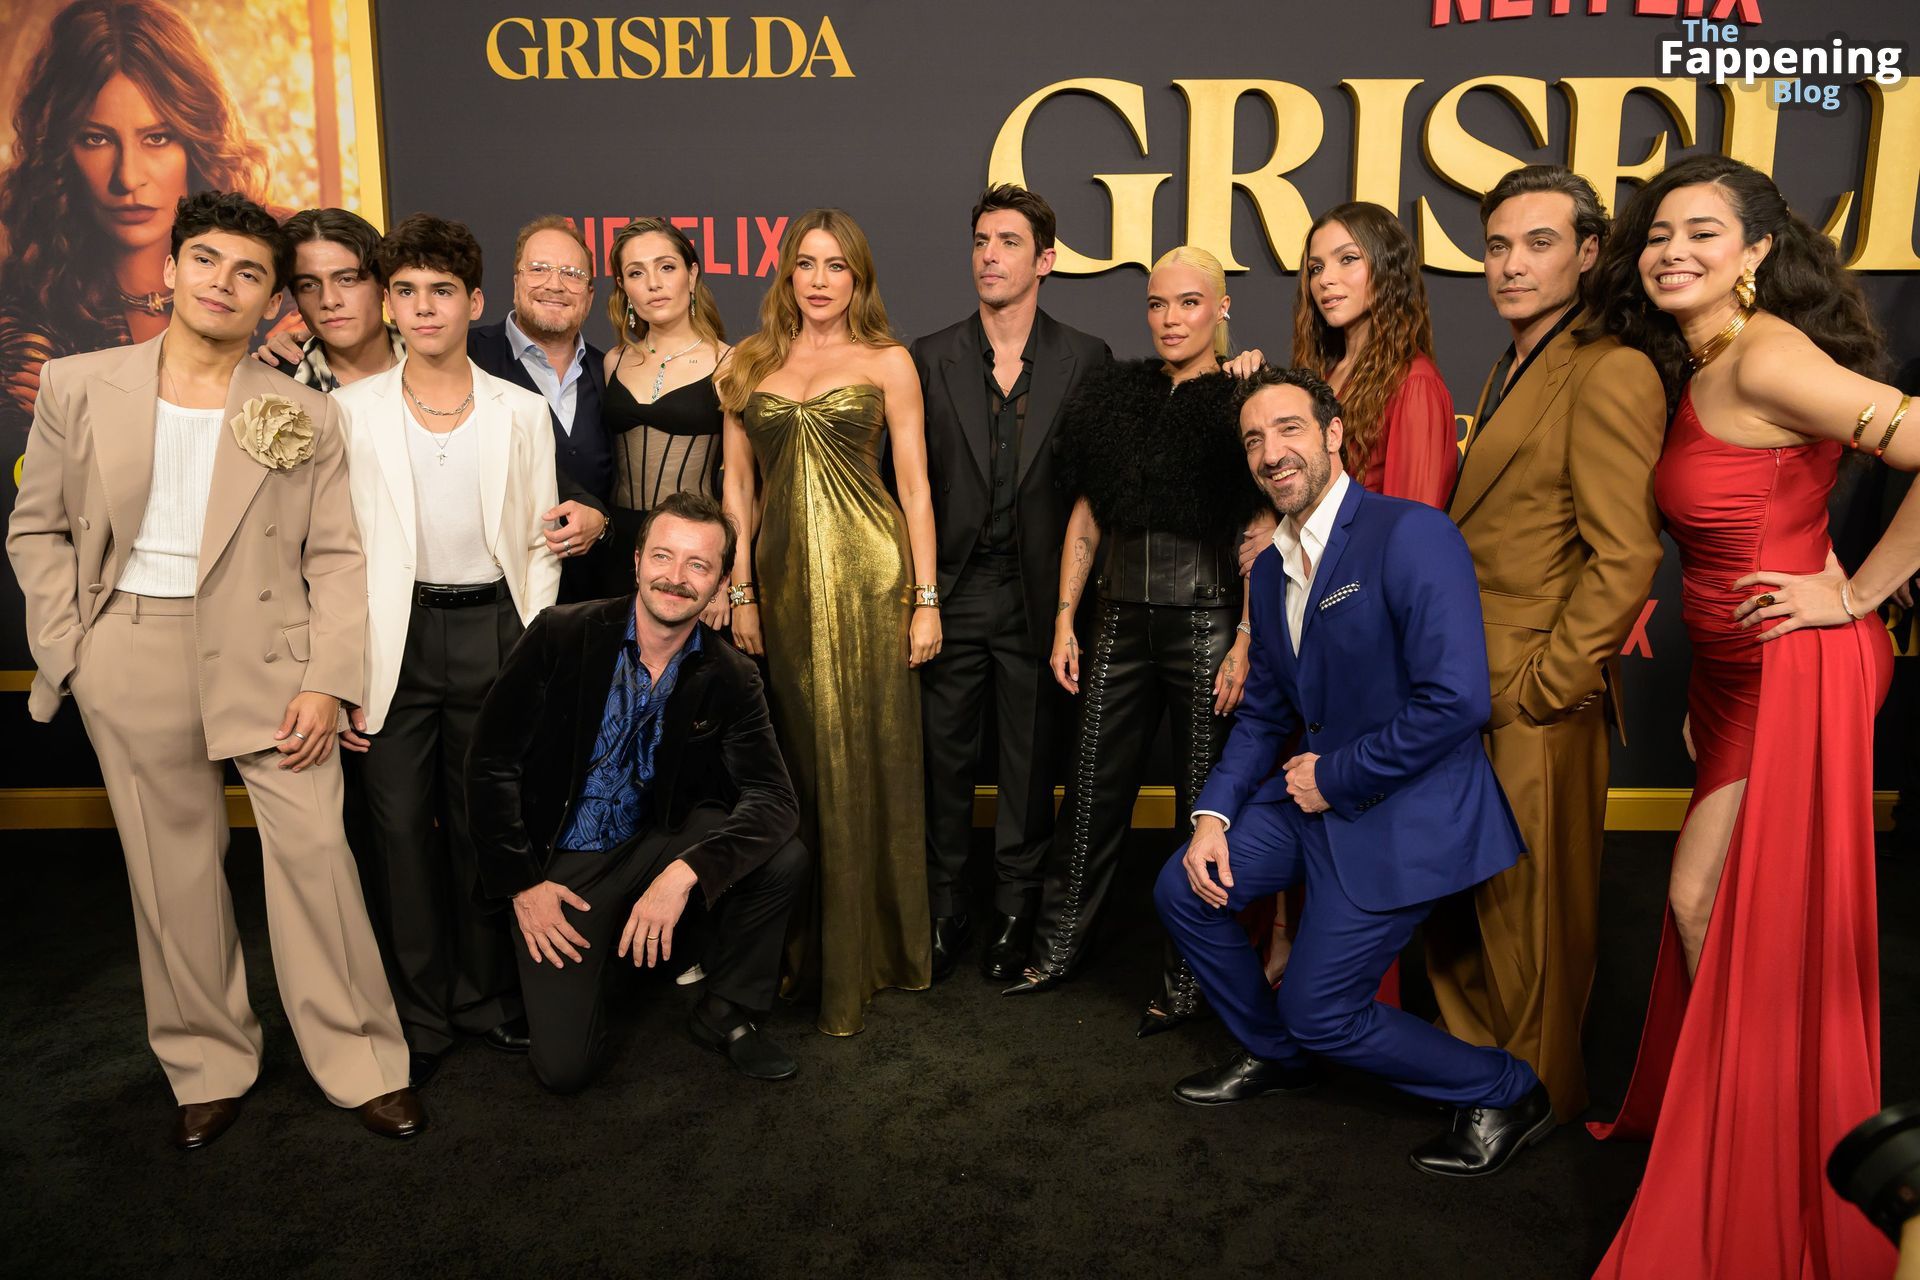 Sofia Vergara Flaunts Her Sexy Boobs at the “Griselda” Premiere (44 Photos)